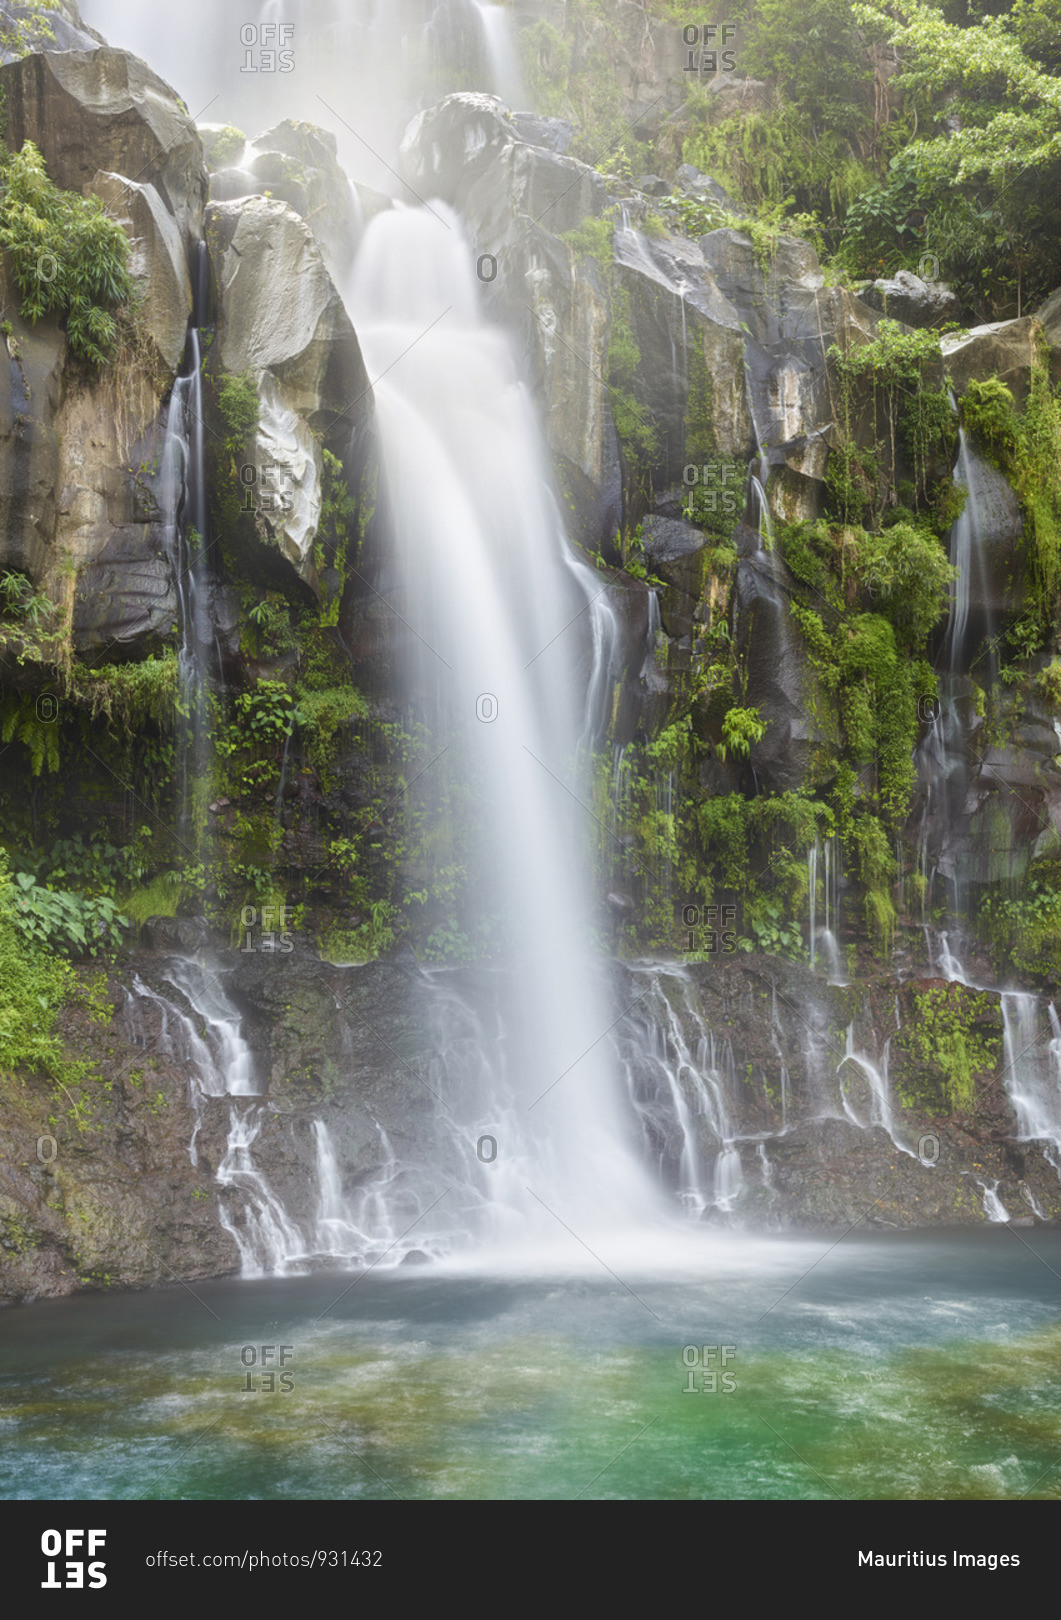 Waterfall Bassin des Aigrettes, Saint Paul, Reunion, France